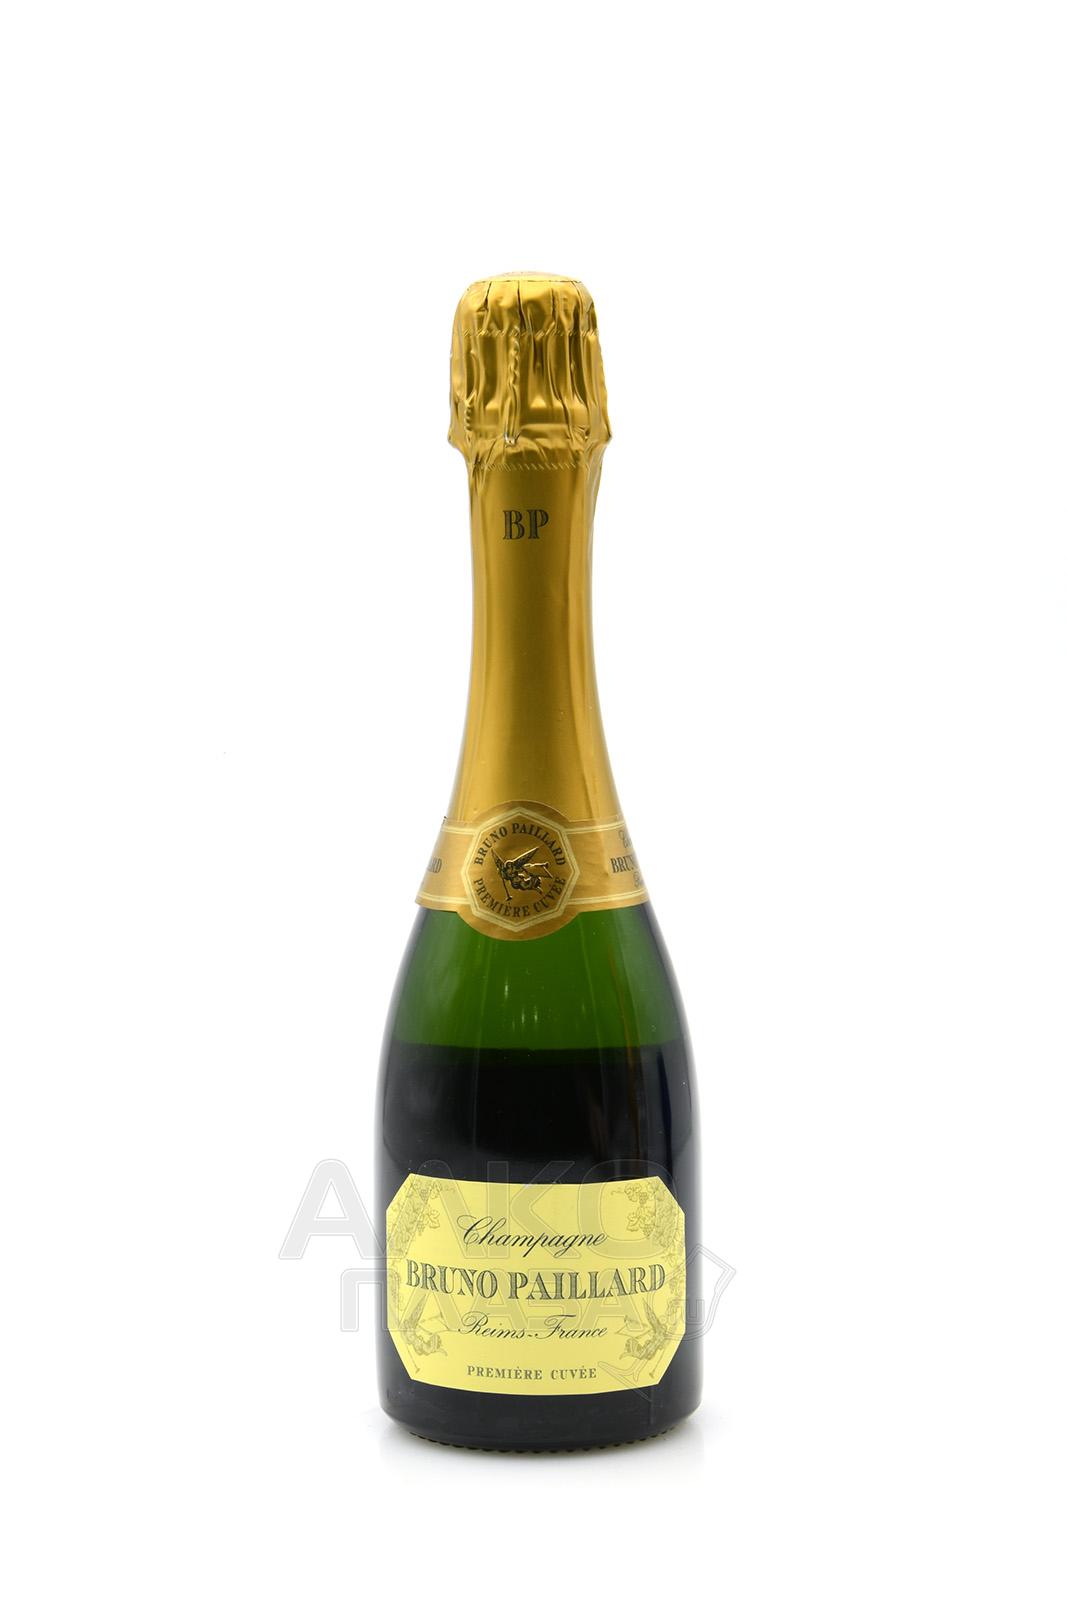 Bruno Paillard Premiere Cuvee Extra Brut - шампанское Брюно Пайар Премье Кюве Экстра Брют 0.375 л